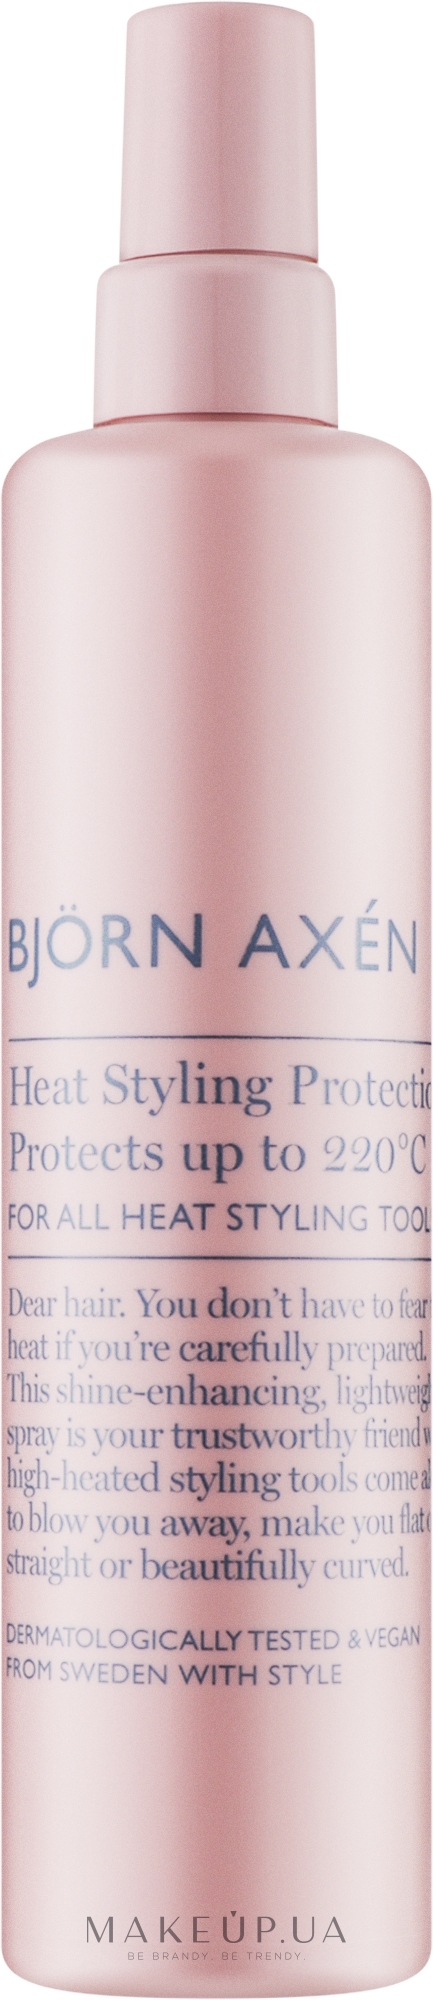 Термозащита для волос - BjOrn AxEn Heat Styling Protection — фото 150ml